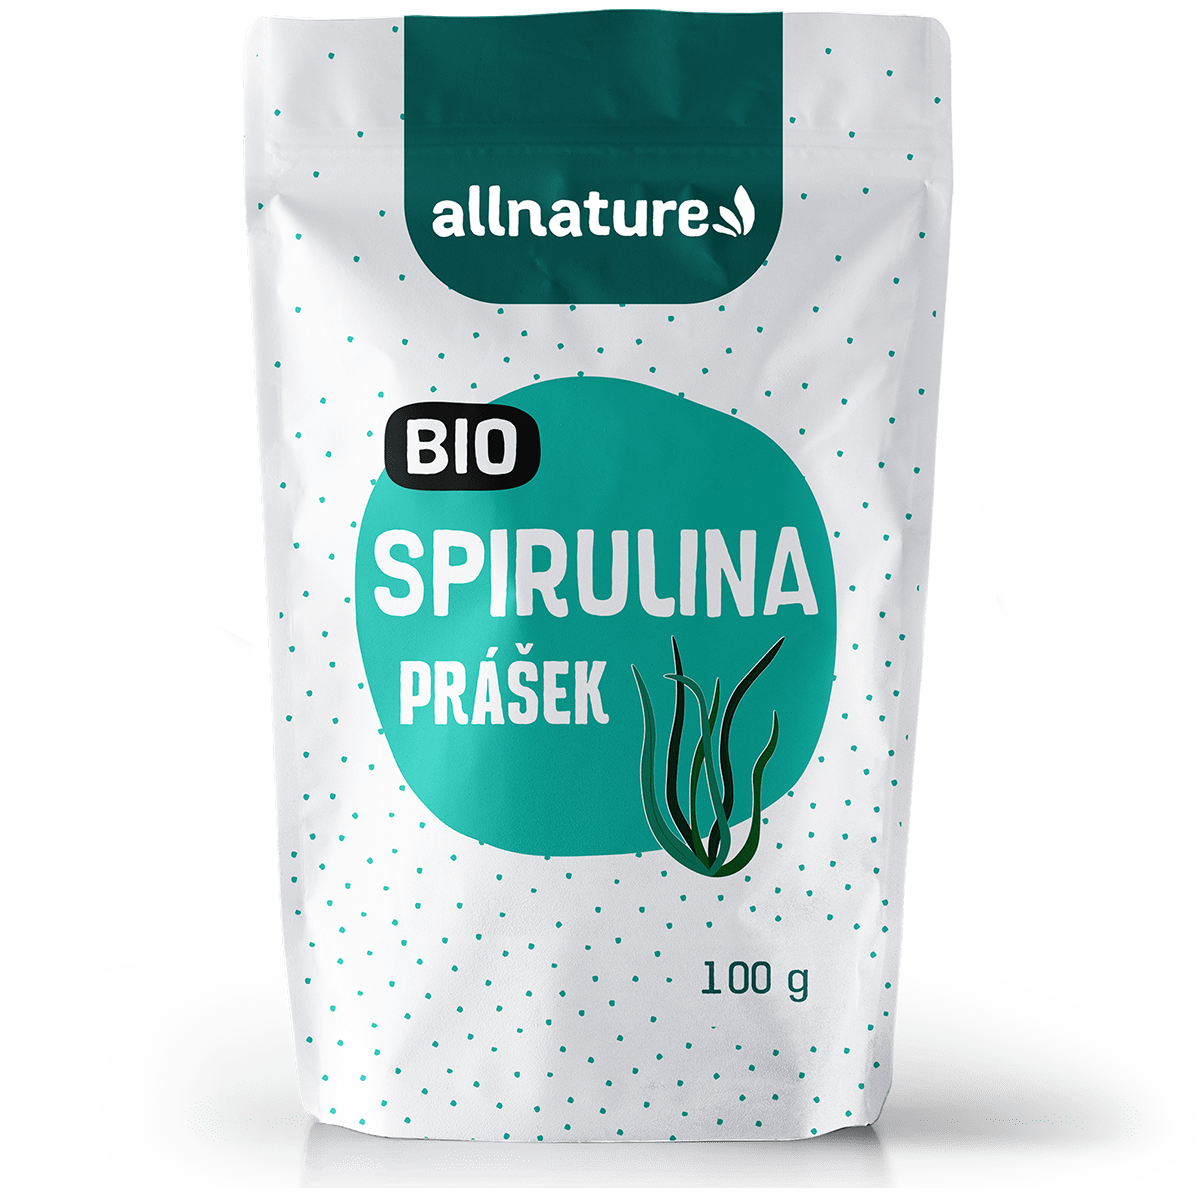 Allnature Spirulina prášek BIO (100 g) - naplňte svůj den zdravým boostem! Allnature